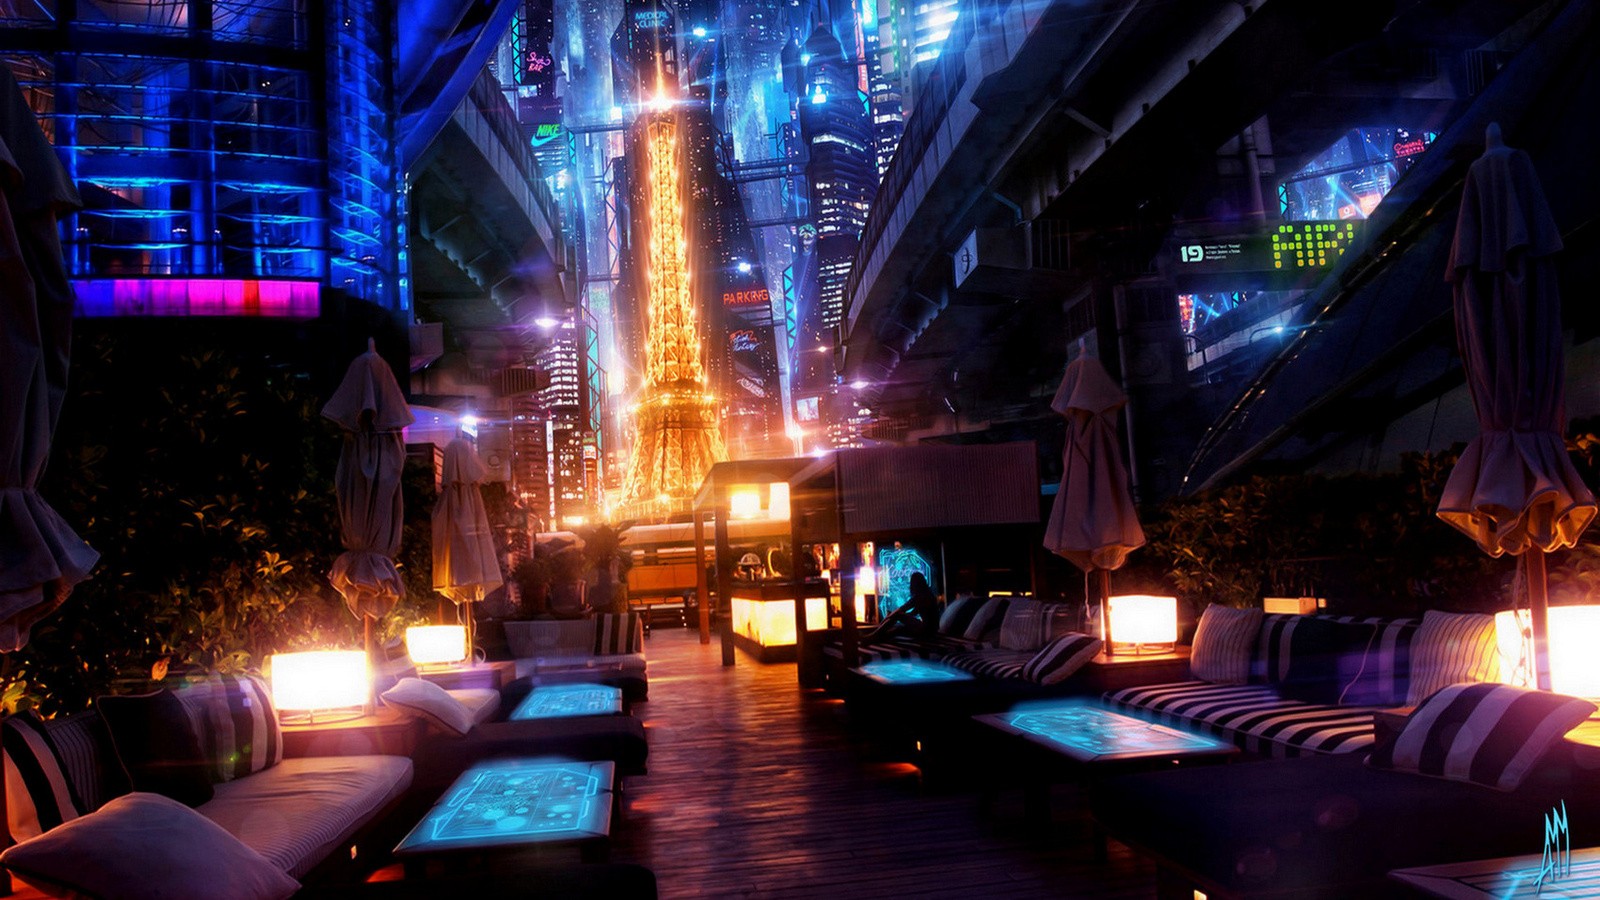 General 1600x900 Japan colorful digital art cyberpunk relaxation bar couch table eiffel tower replica futuristic futuristic city city Paris science fiction